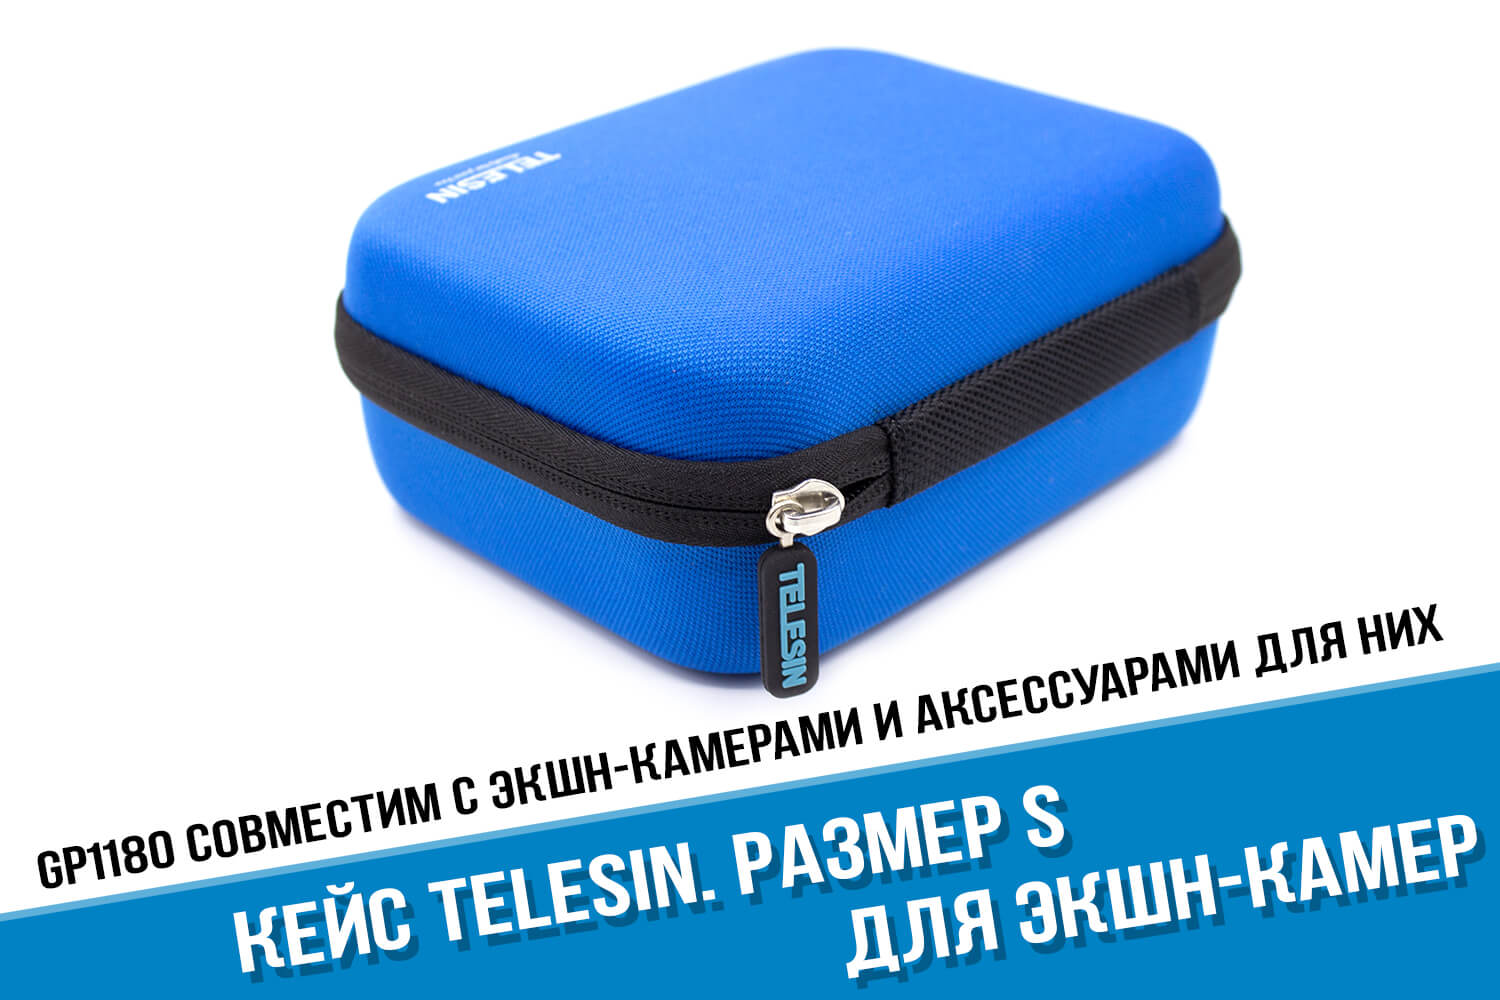 Голубой малый кейс для экшн-камеры GoPro фирмы Telesin